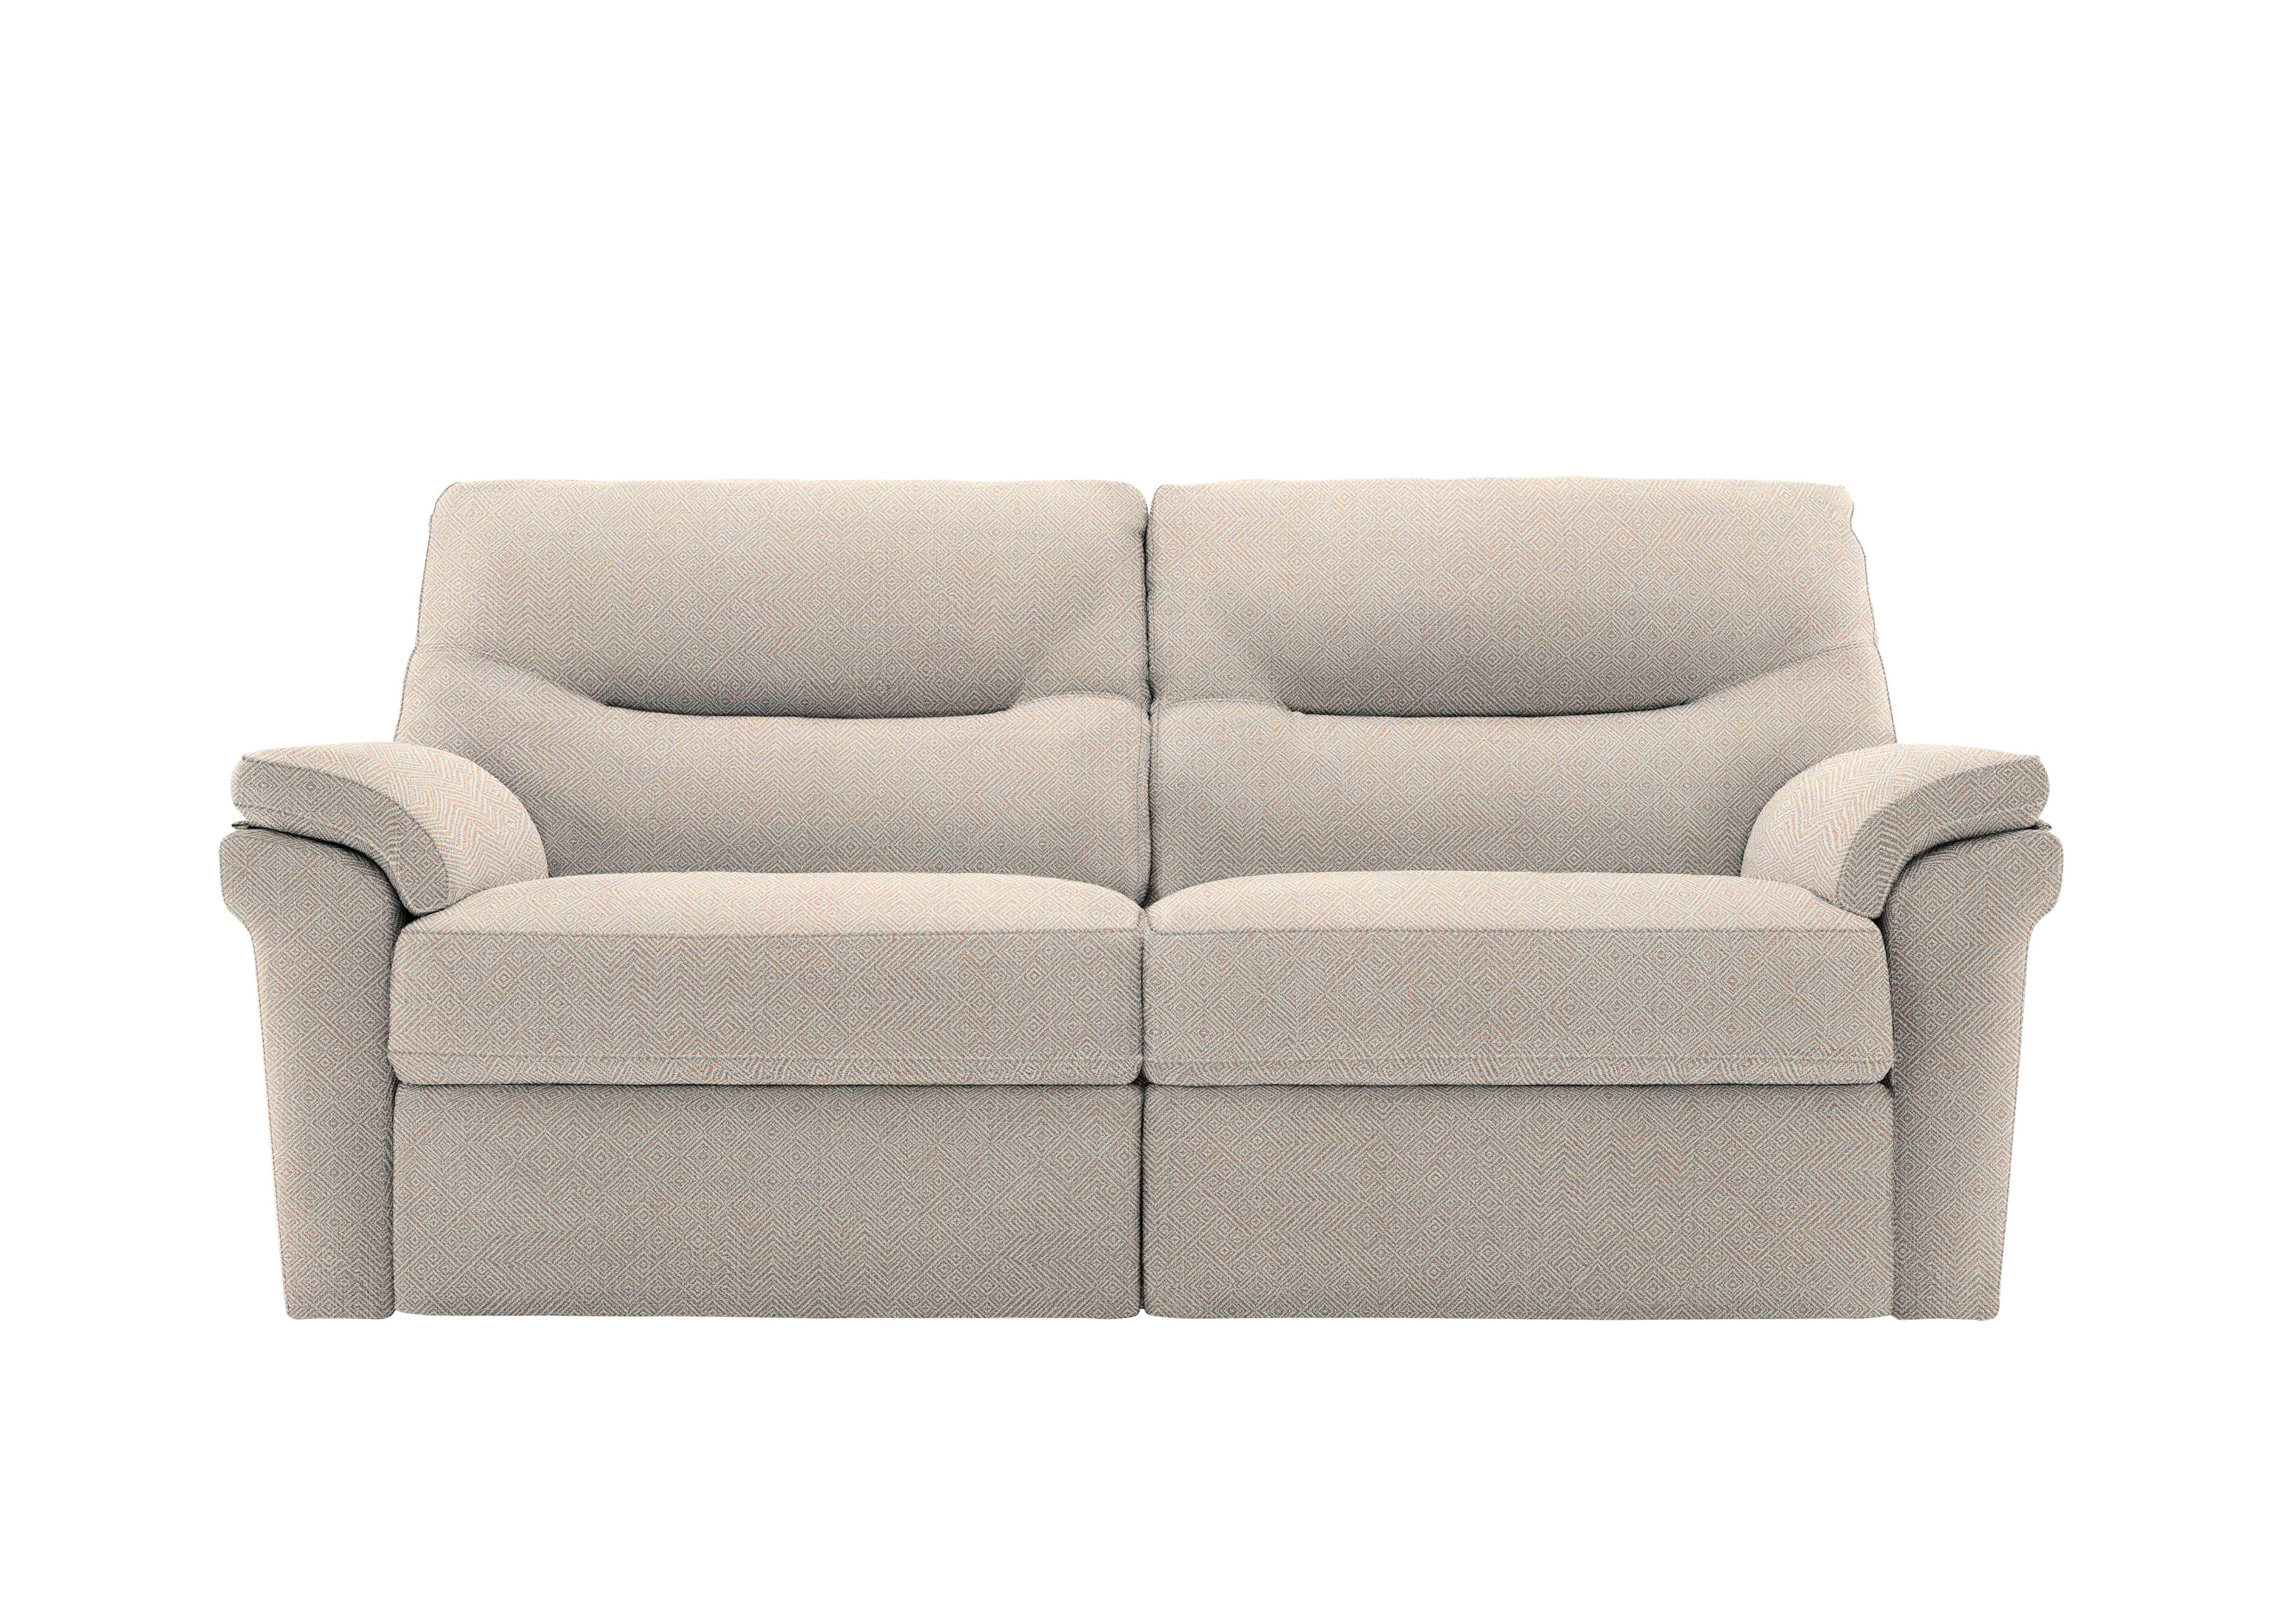 Seattle 3 Seater Fabric Sofa in B011 Nebular Blush on Furniture Village